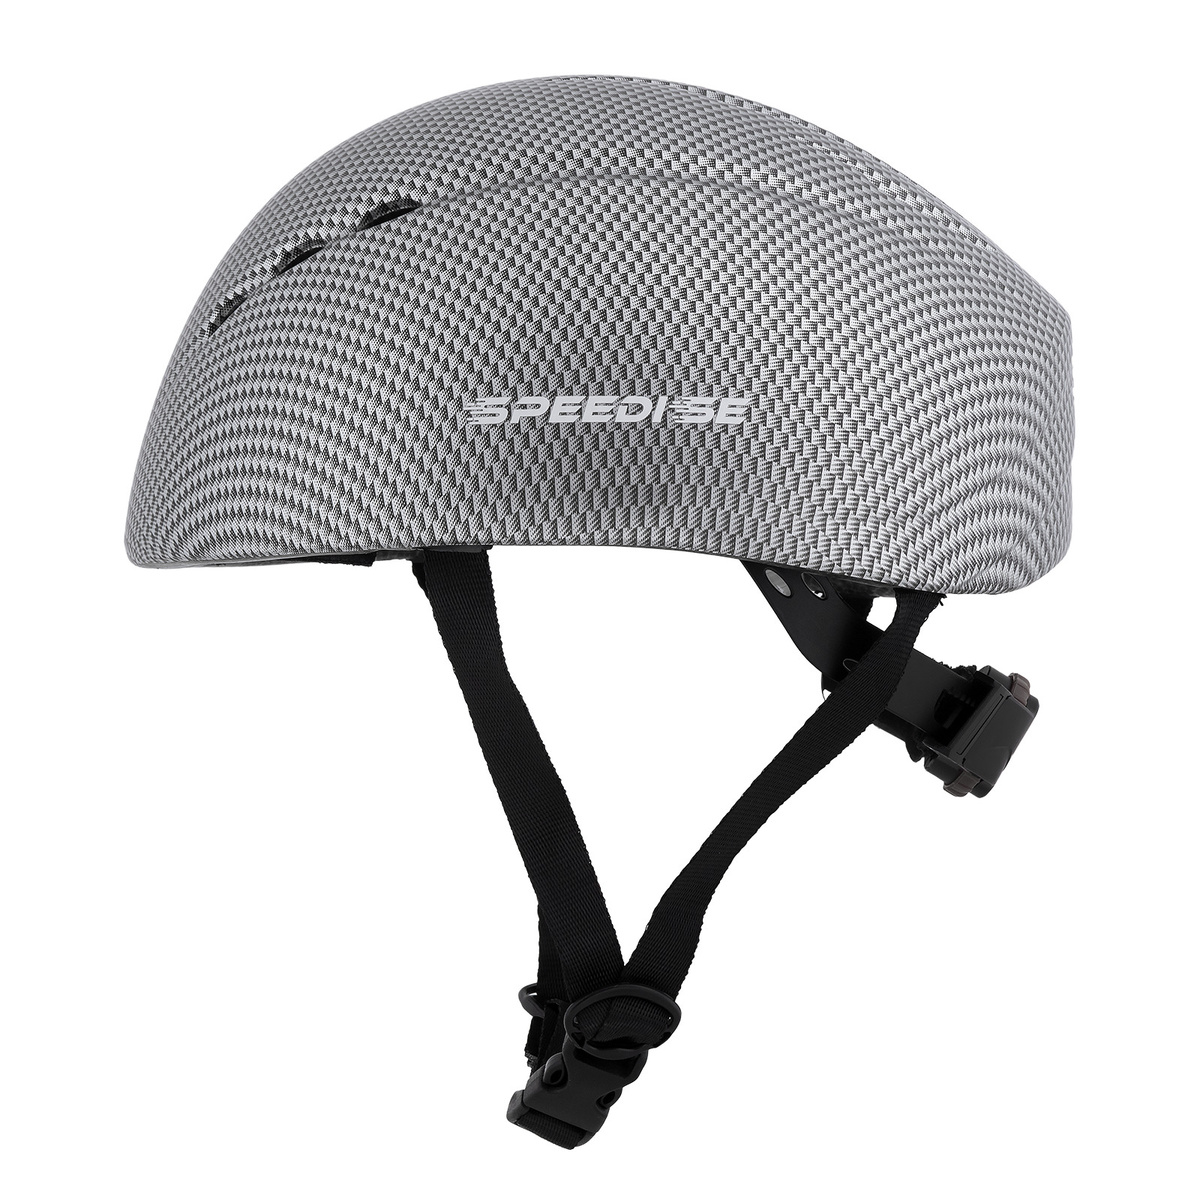 Шлем SpeediSe для шорт-трека и масс-старта CARBON размер M #1